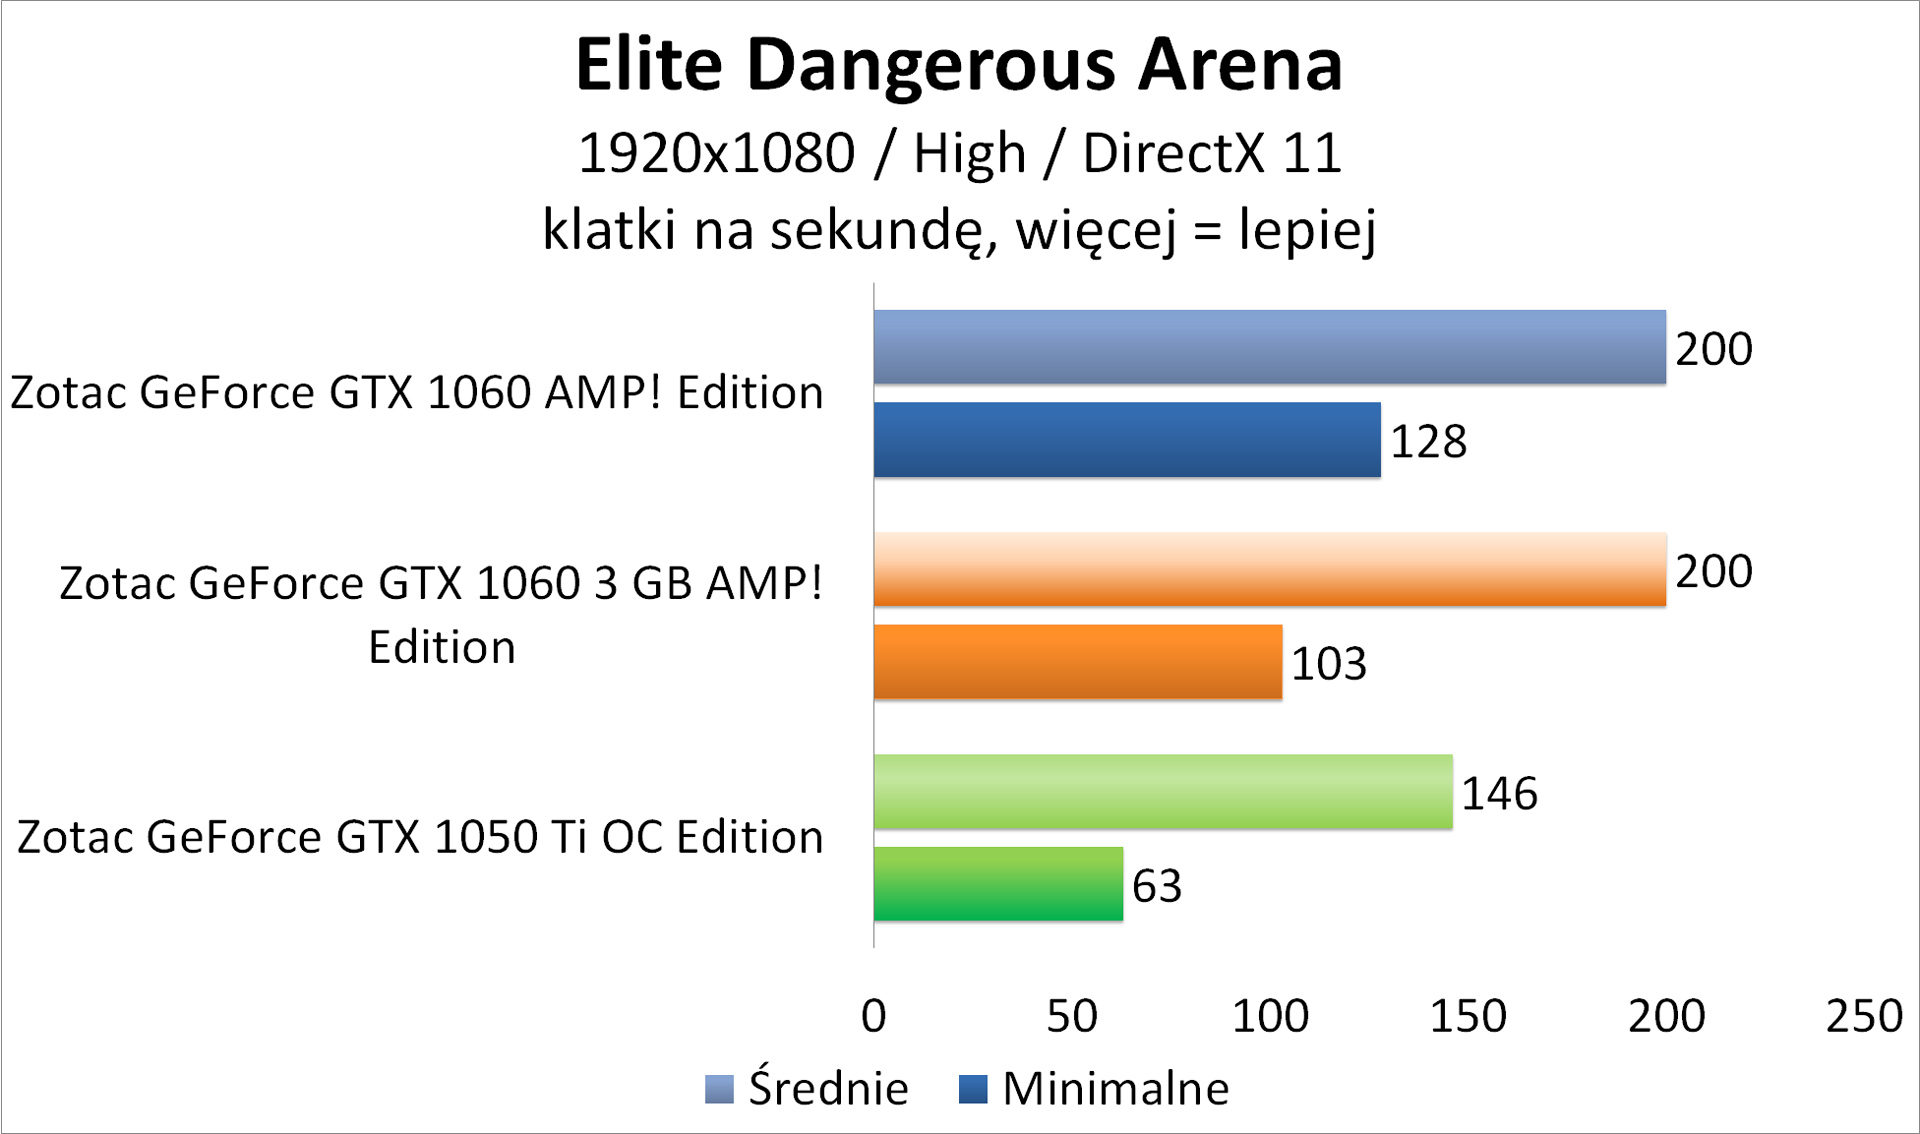 Zotac GeForce GTX 1050 Ti OC Edition - Elite: Dangerous Arena